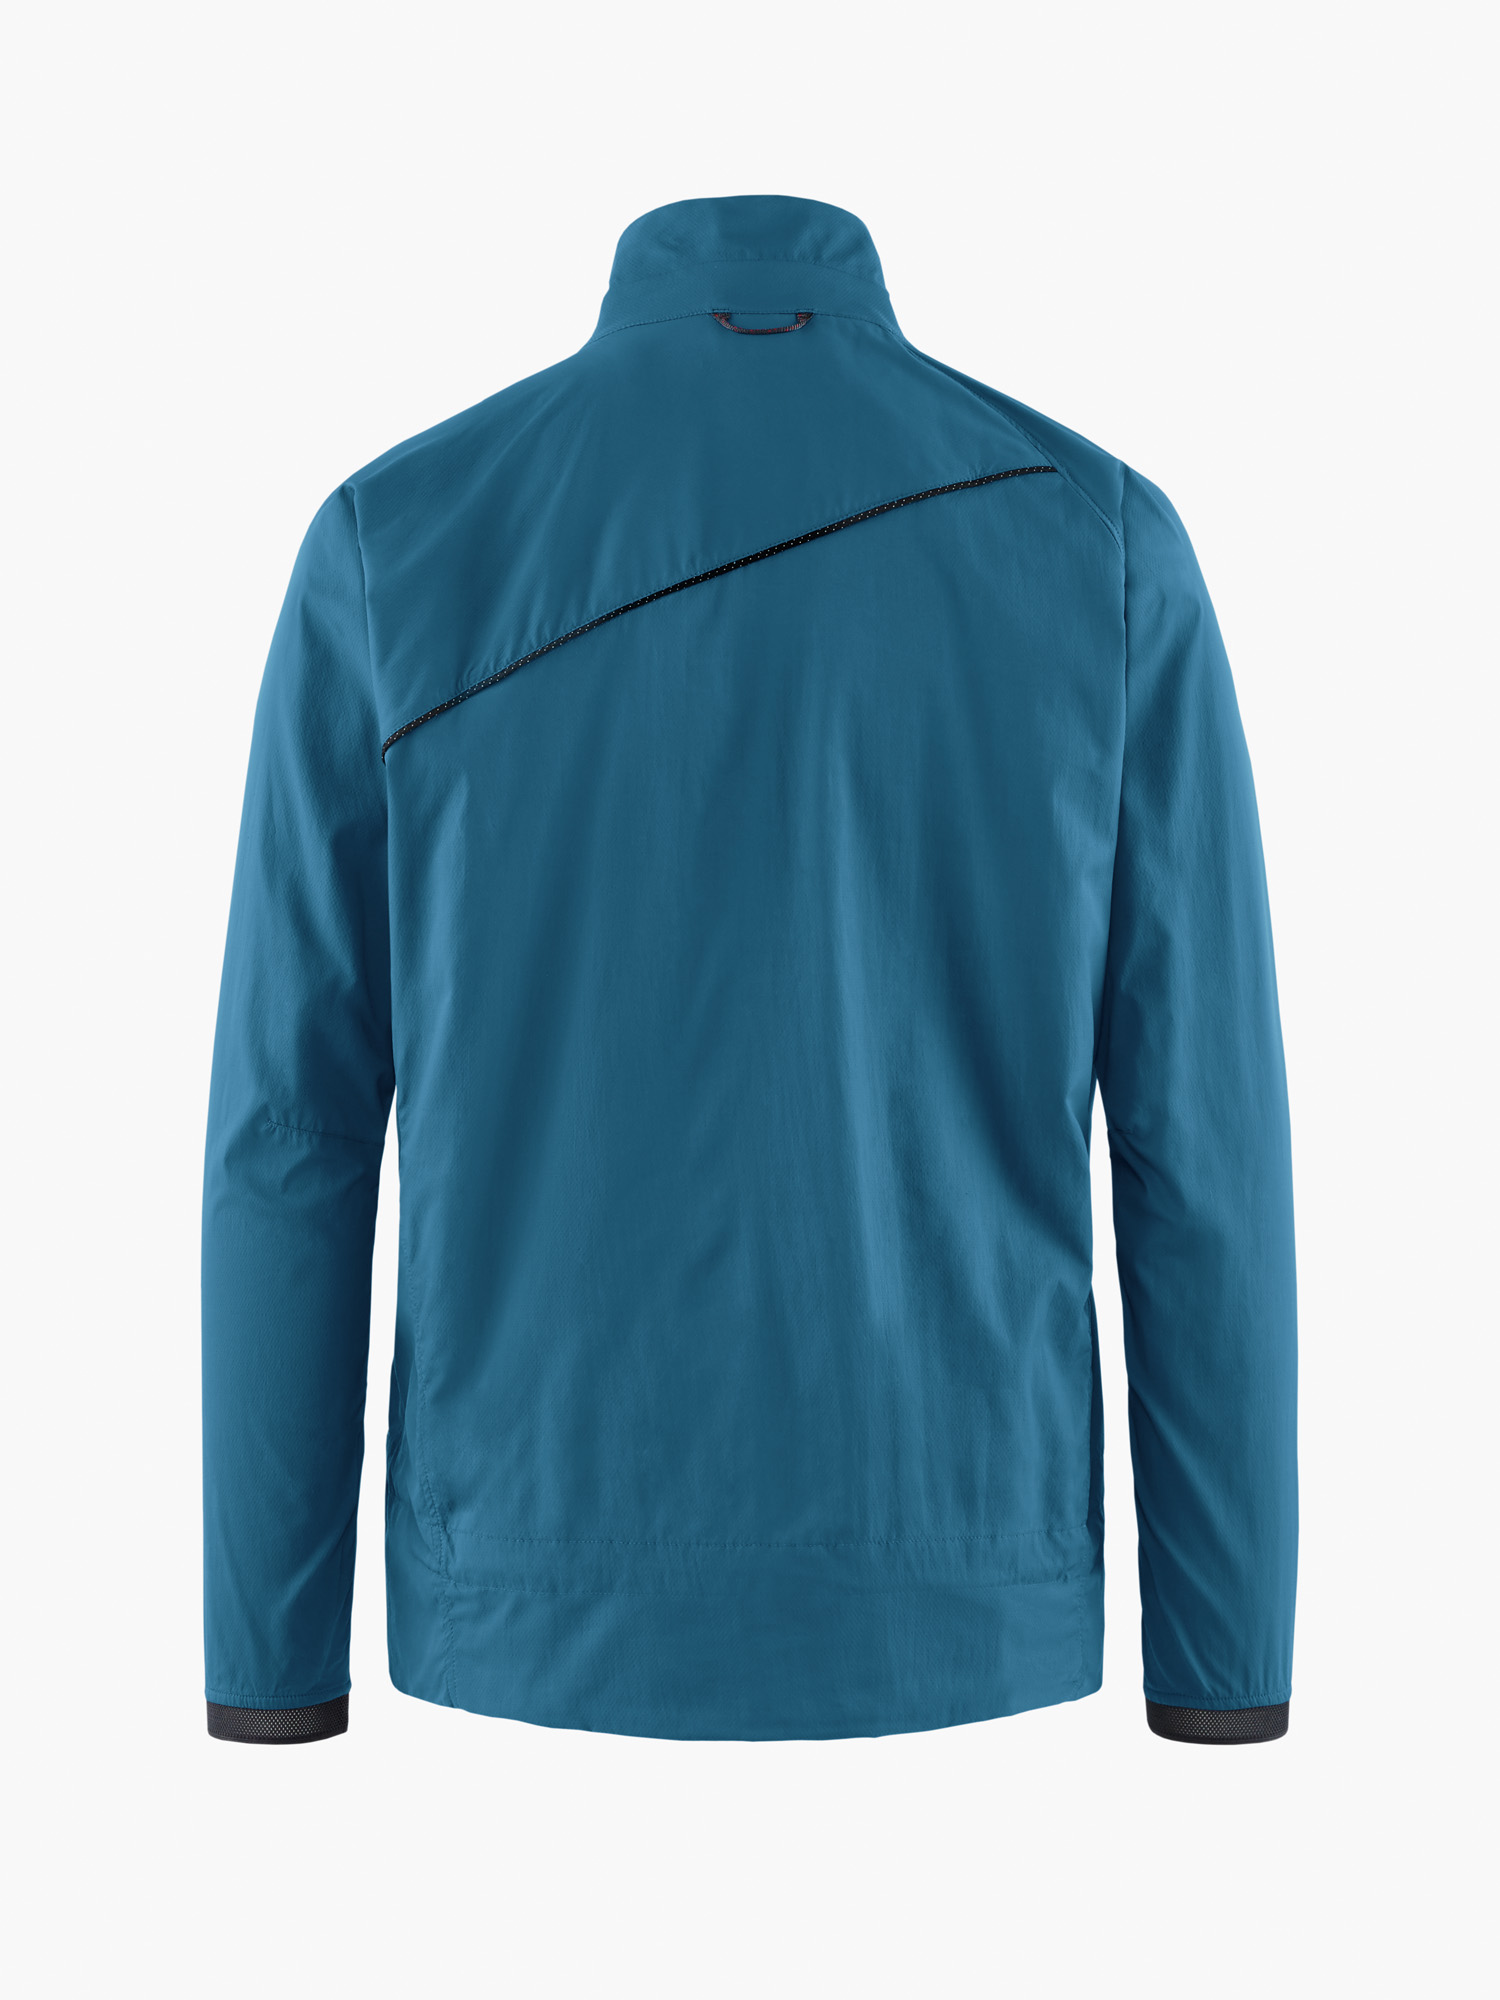 10616M91 - Nal Jacket M's - Monkshood Blue